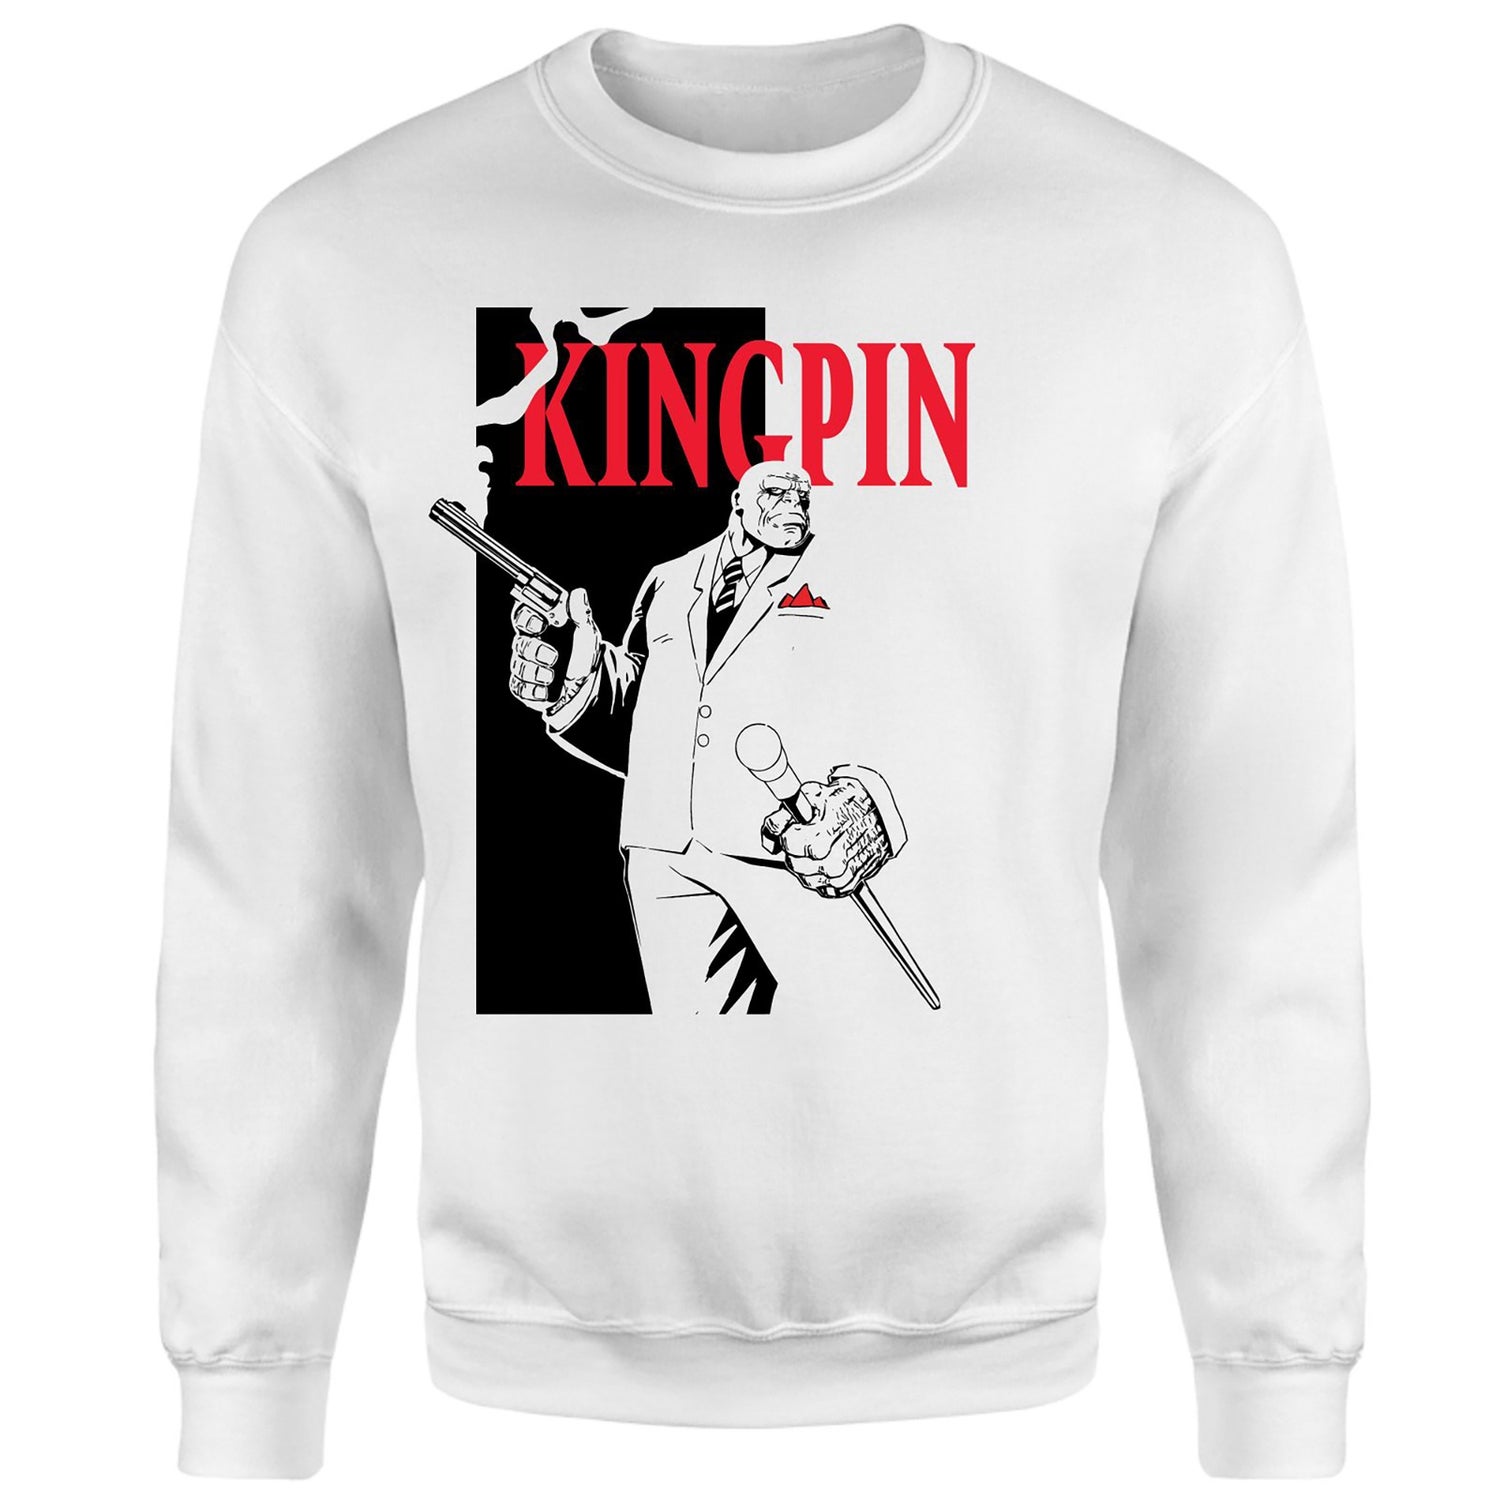 Kingpin Sweatshirt - White